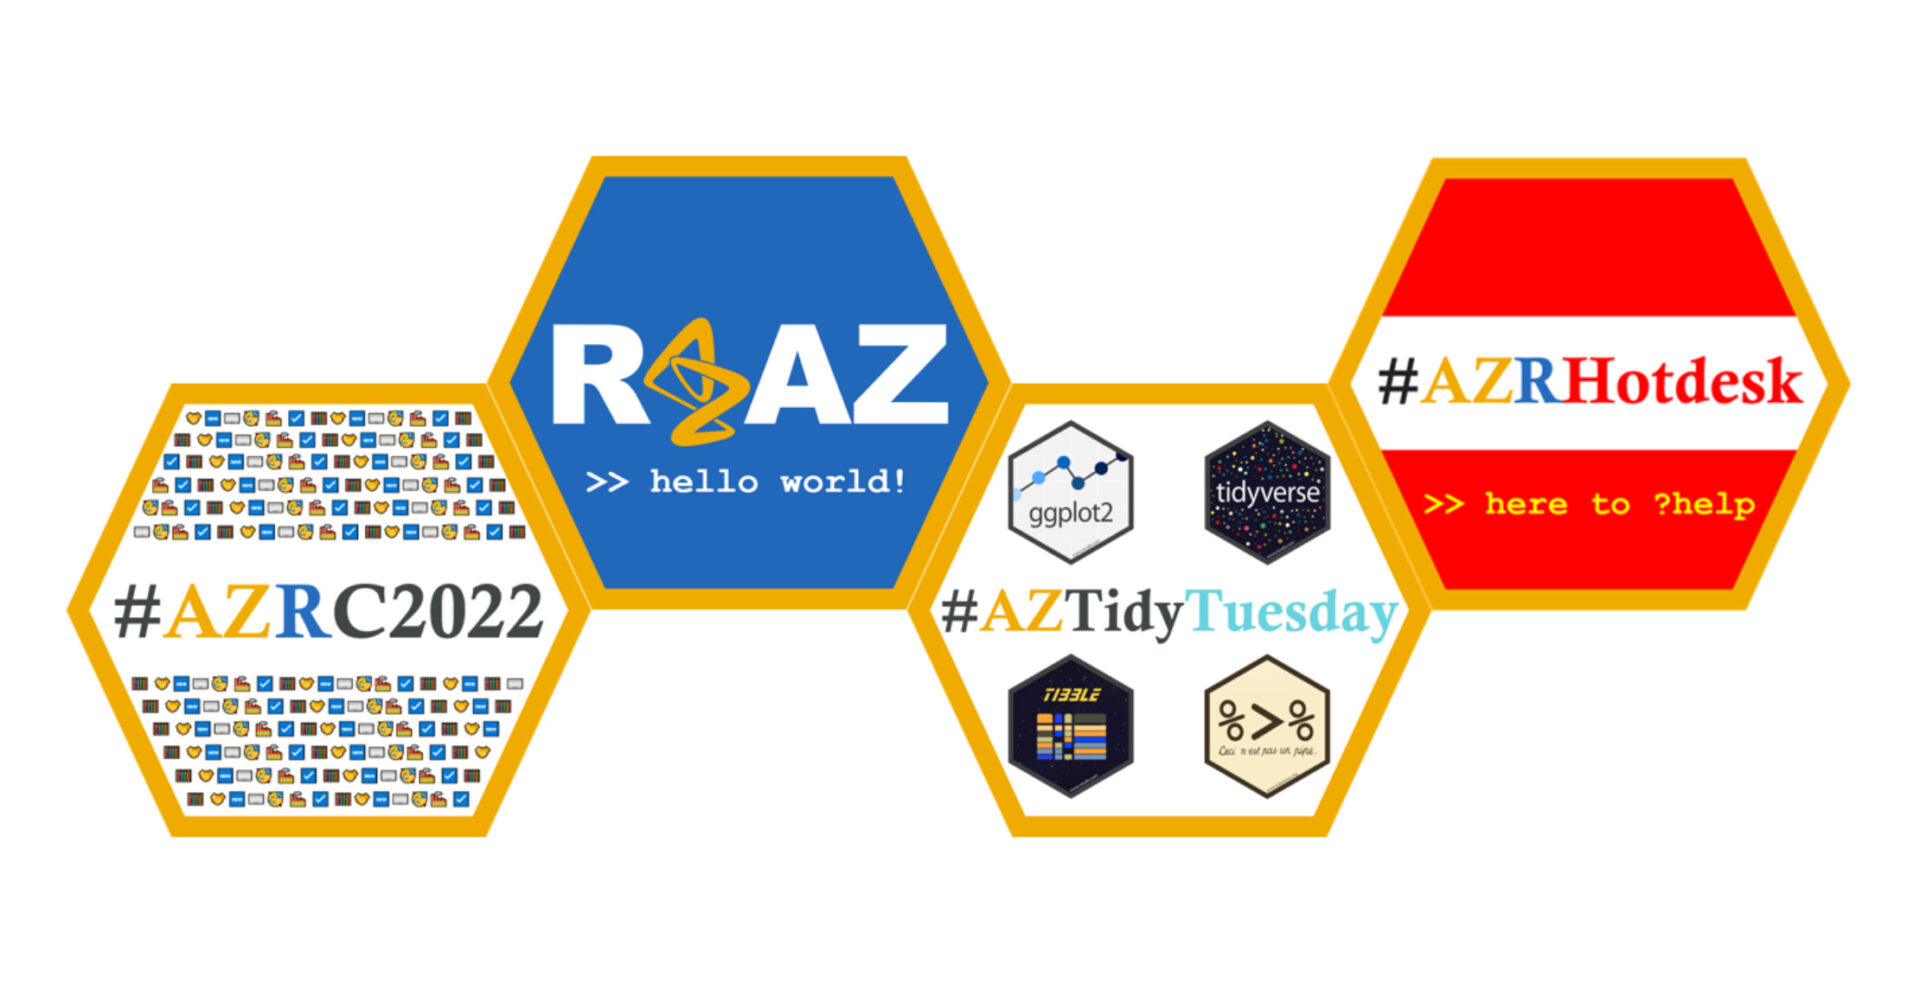 A group of hex stickers for AZ R 2022, R at AZ, AZ Tidy Tuesday, and AZ R hotdesk.